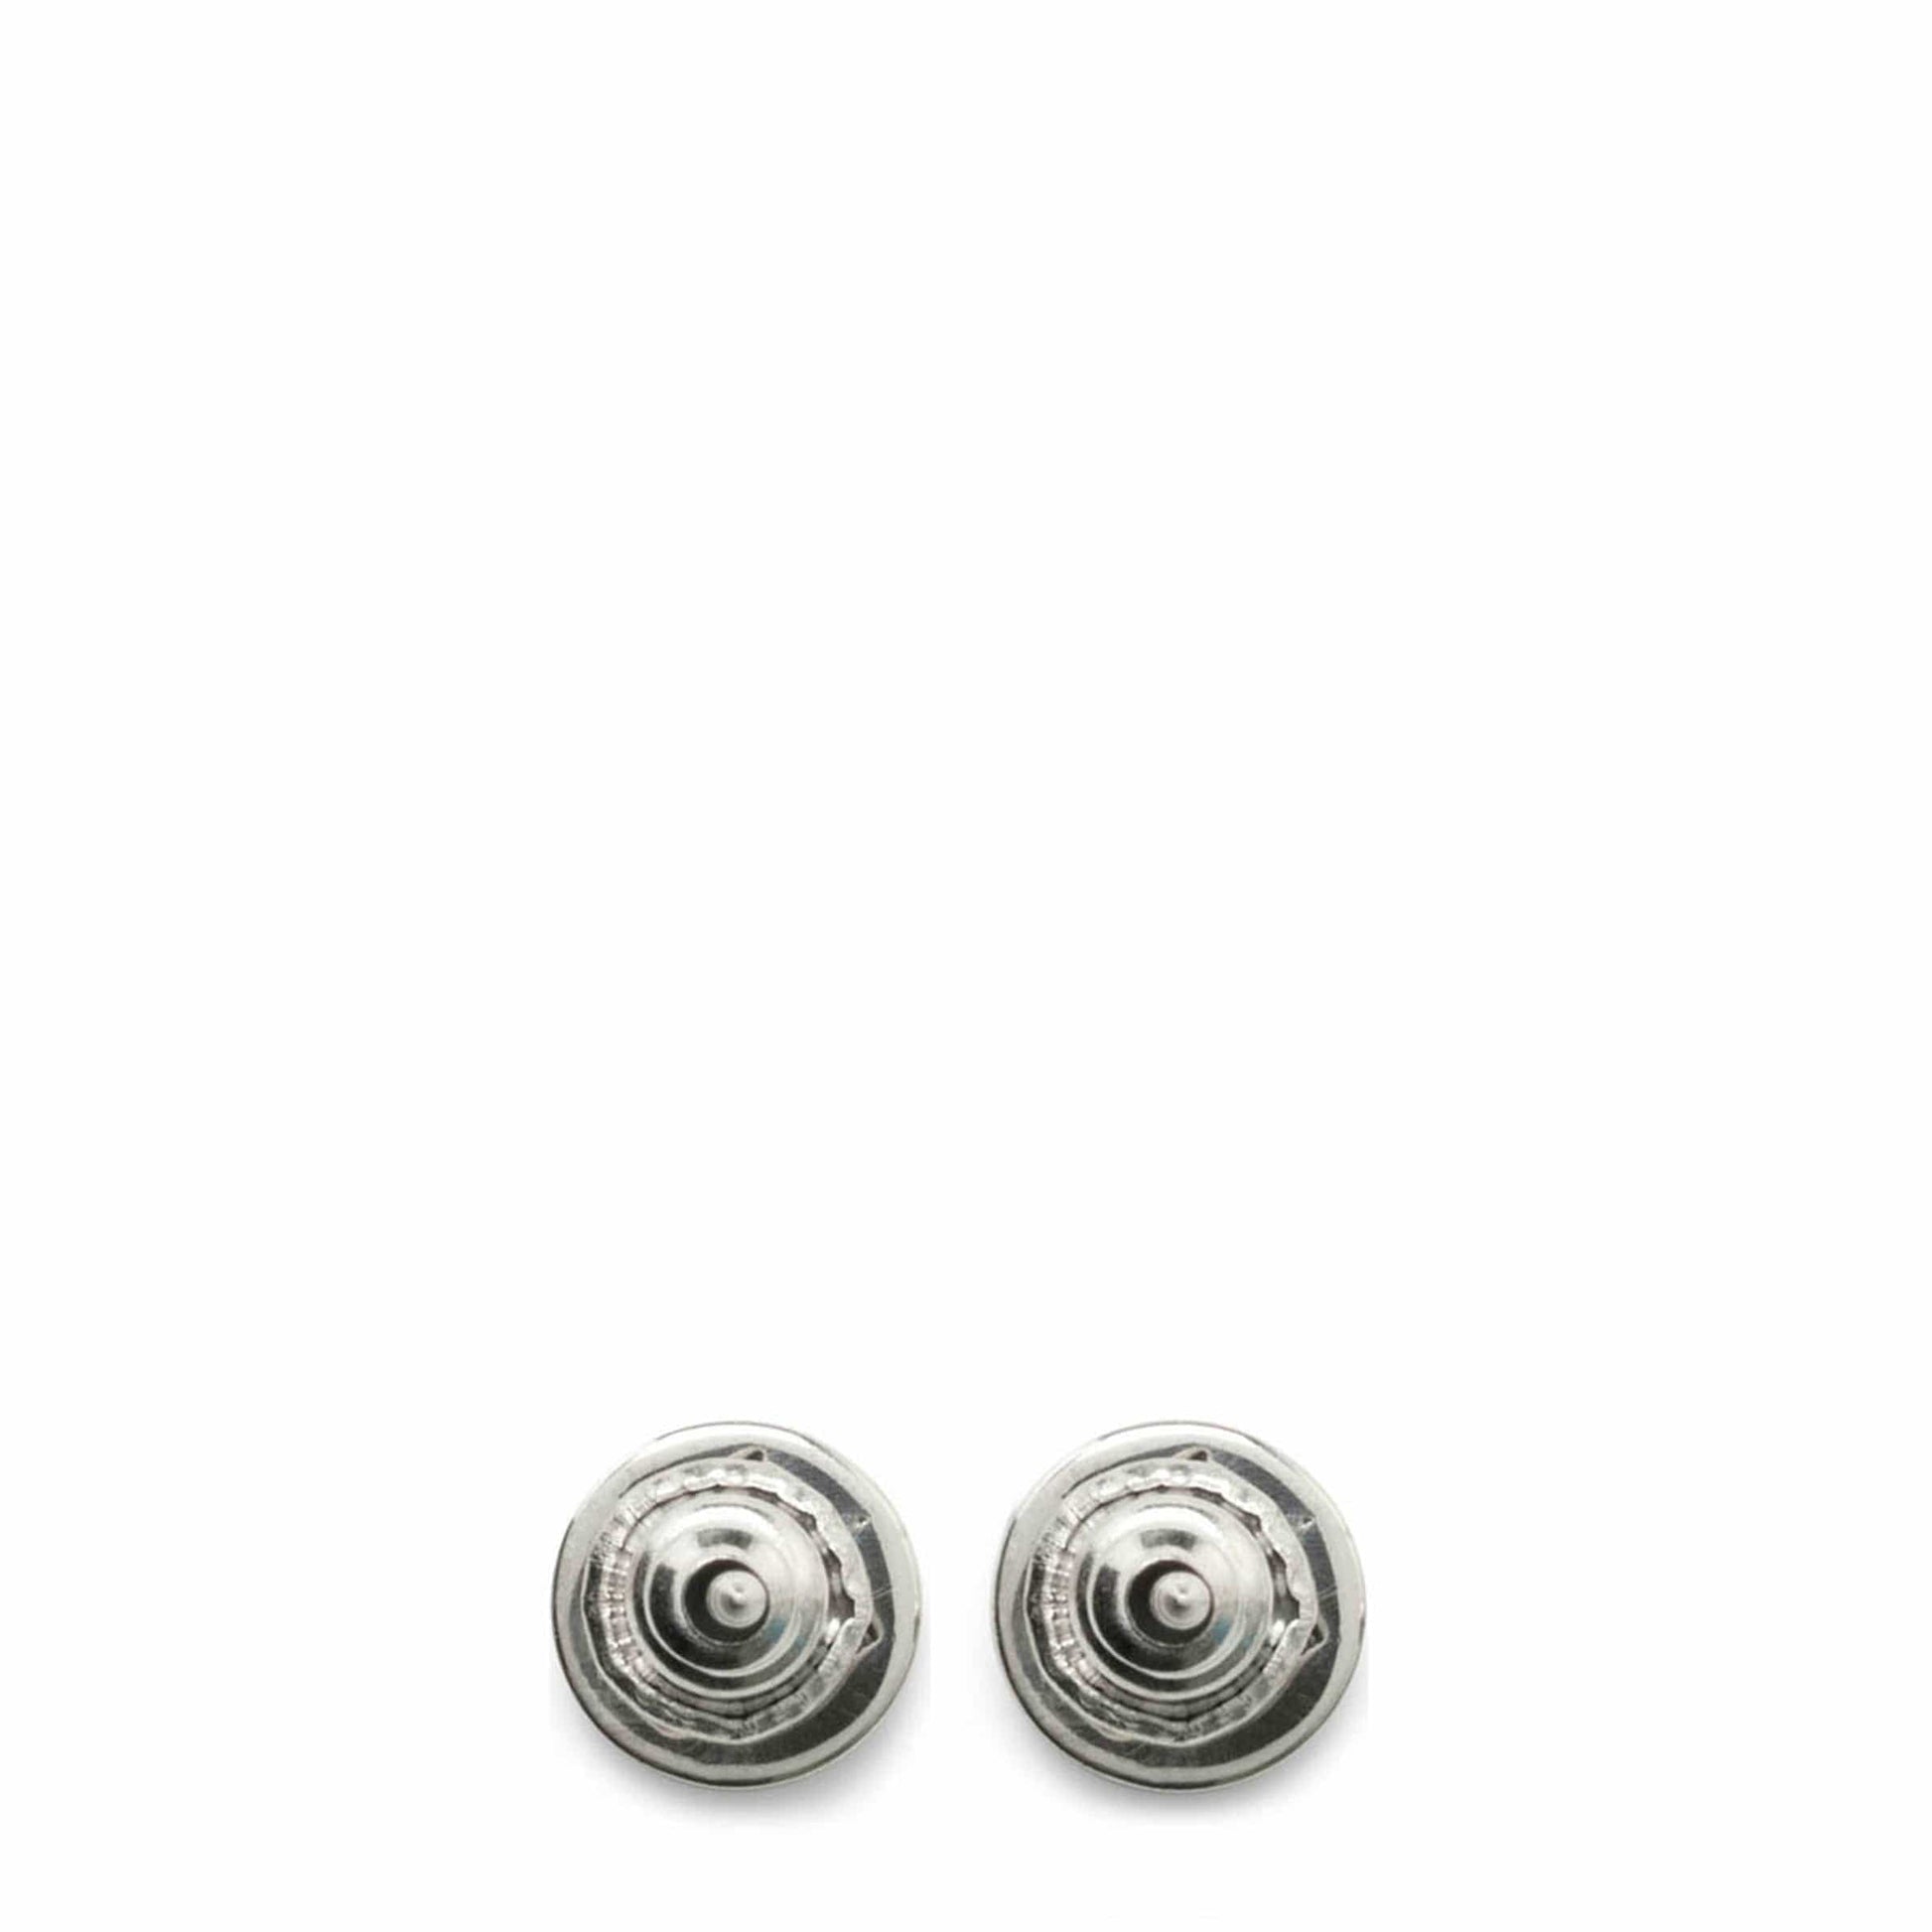 Maple Jewelry SILVER 925 / O/S NEVERMIND EARRINGS